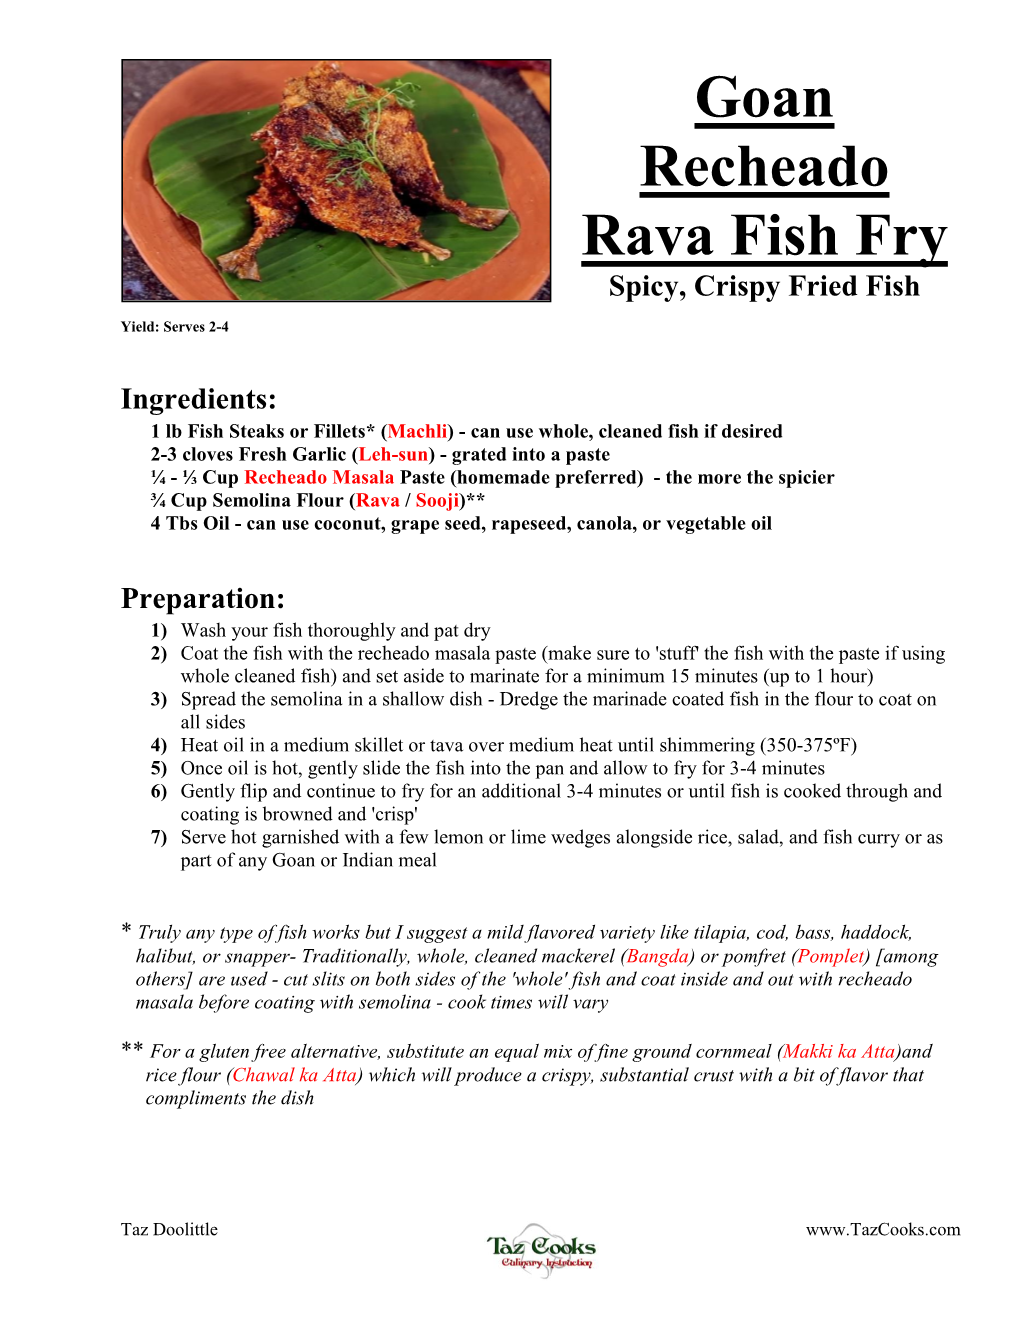 Goan Recheado Rava Fish Fry Spicy, Crispy Fried Fish